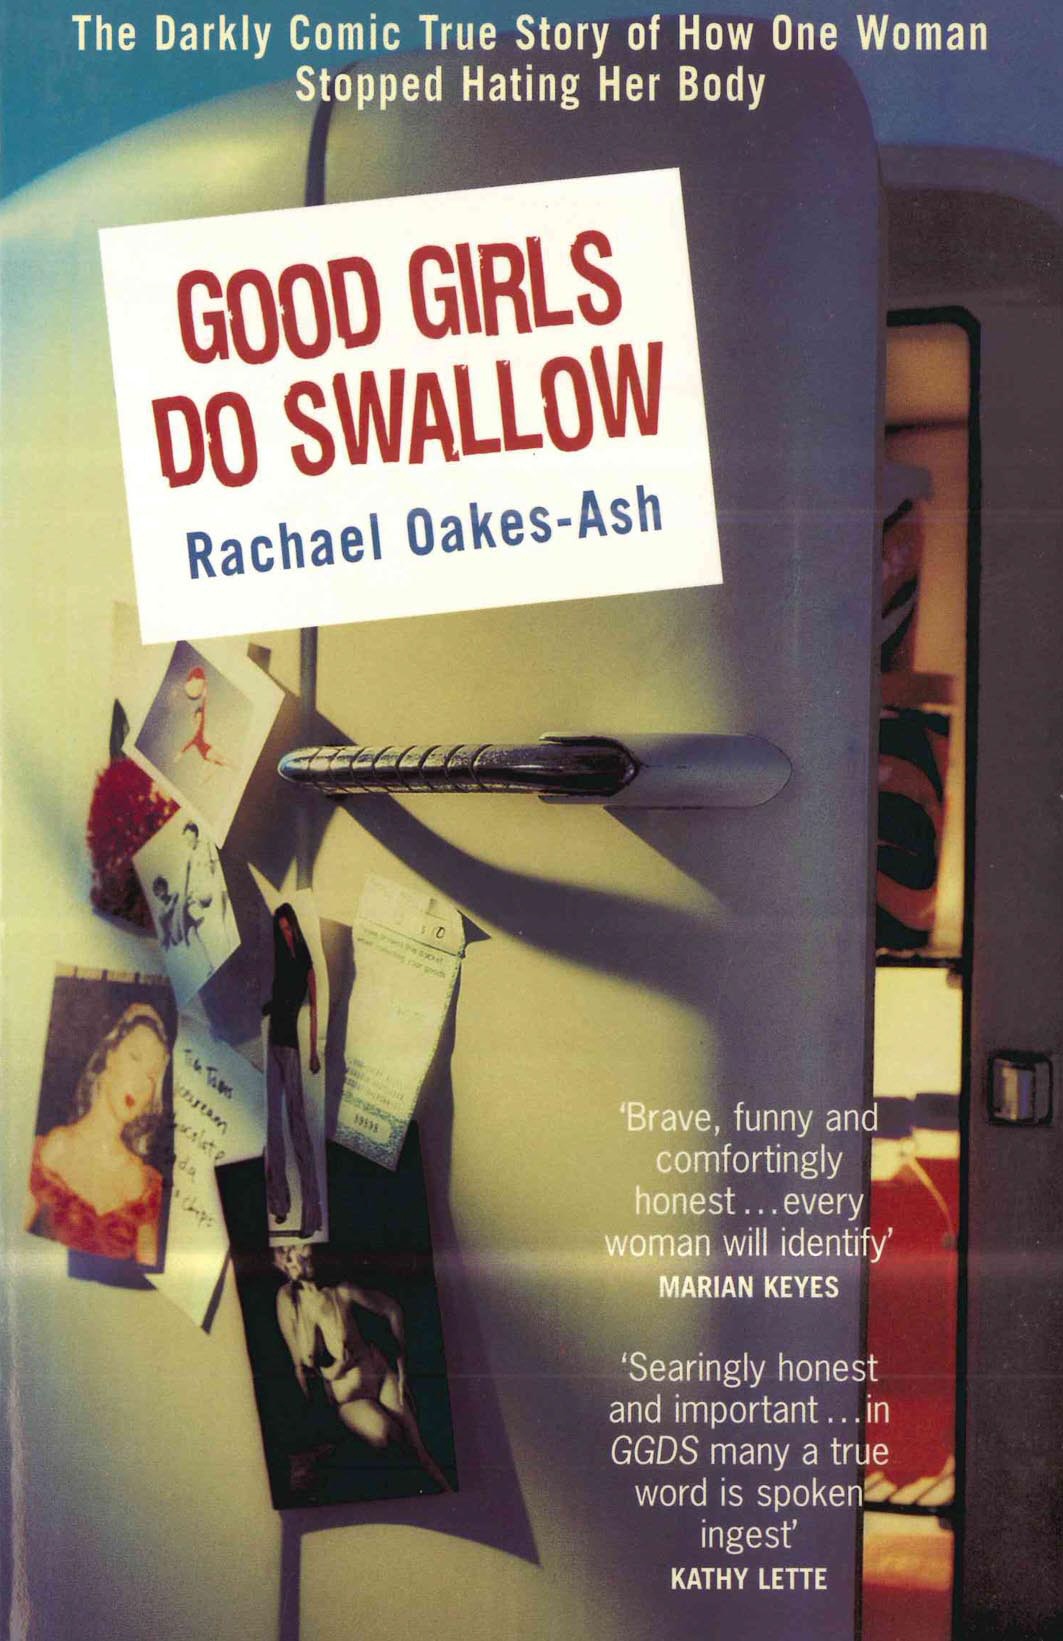 Book “Good Girls Do Swallow” by Rachael Oakes-Ash — September 20, 2001